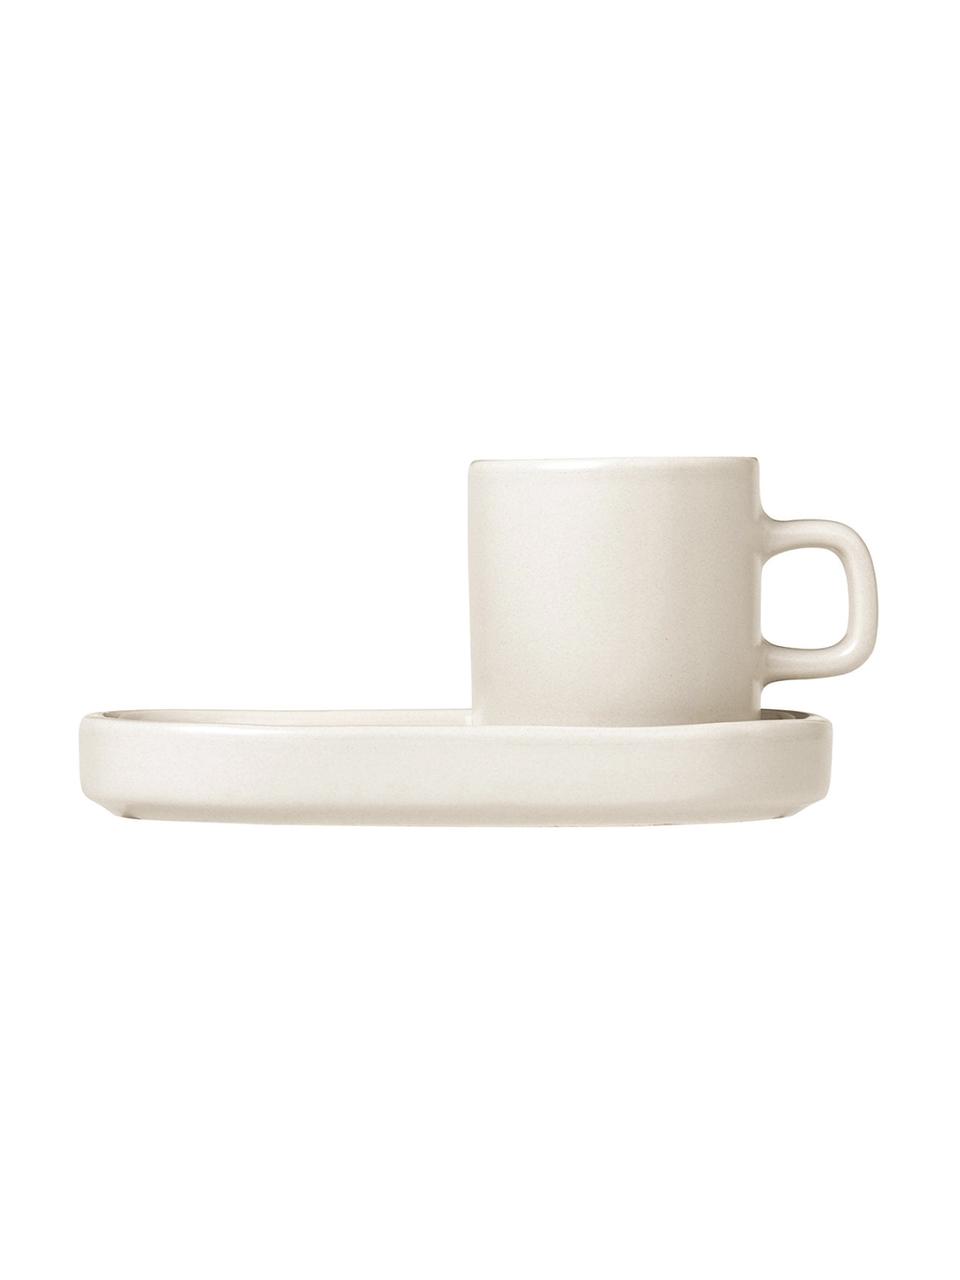 Tazas de café expresso con platitos Pilar, 2 uds., Cerámica, Blanco crema, Ø 5 x Al 6 cm, 50 ml